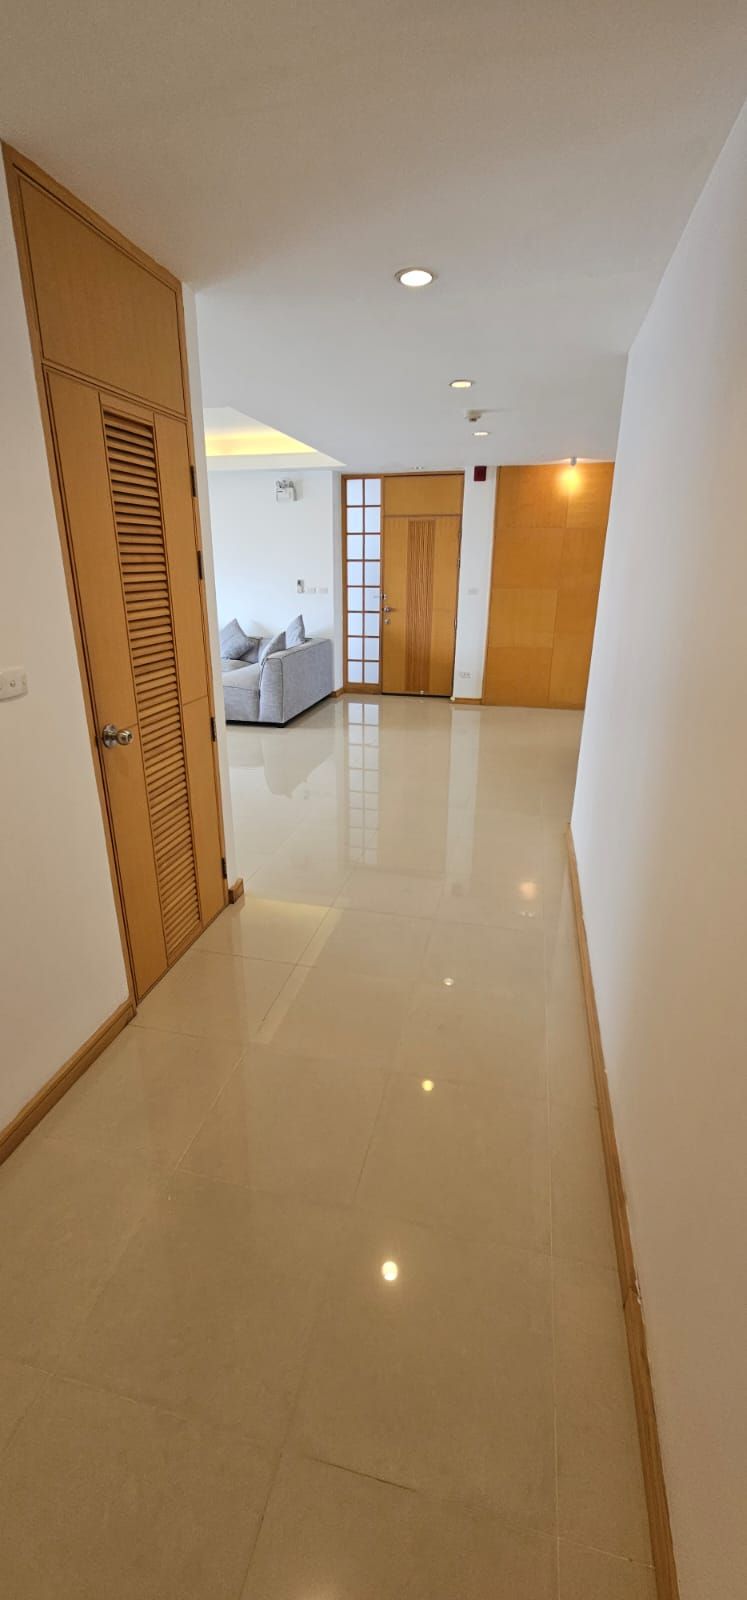 3 Bedrooms, 3 Bathrooms + Maid Quarter 9th Floor 250sqm Esmeralda Apartments For Rent